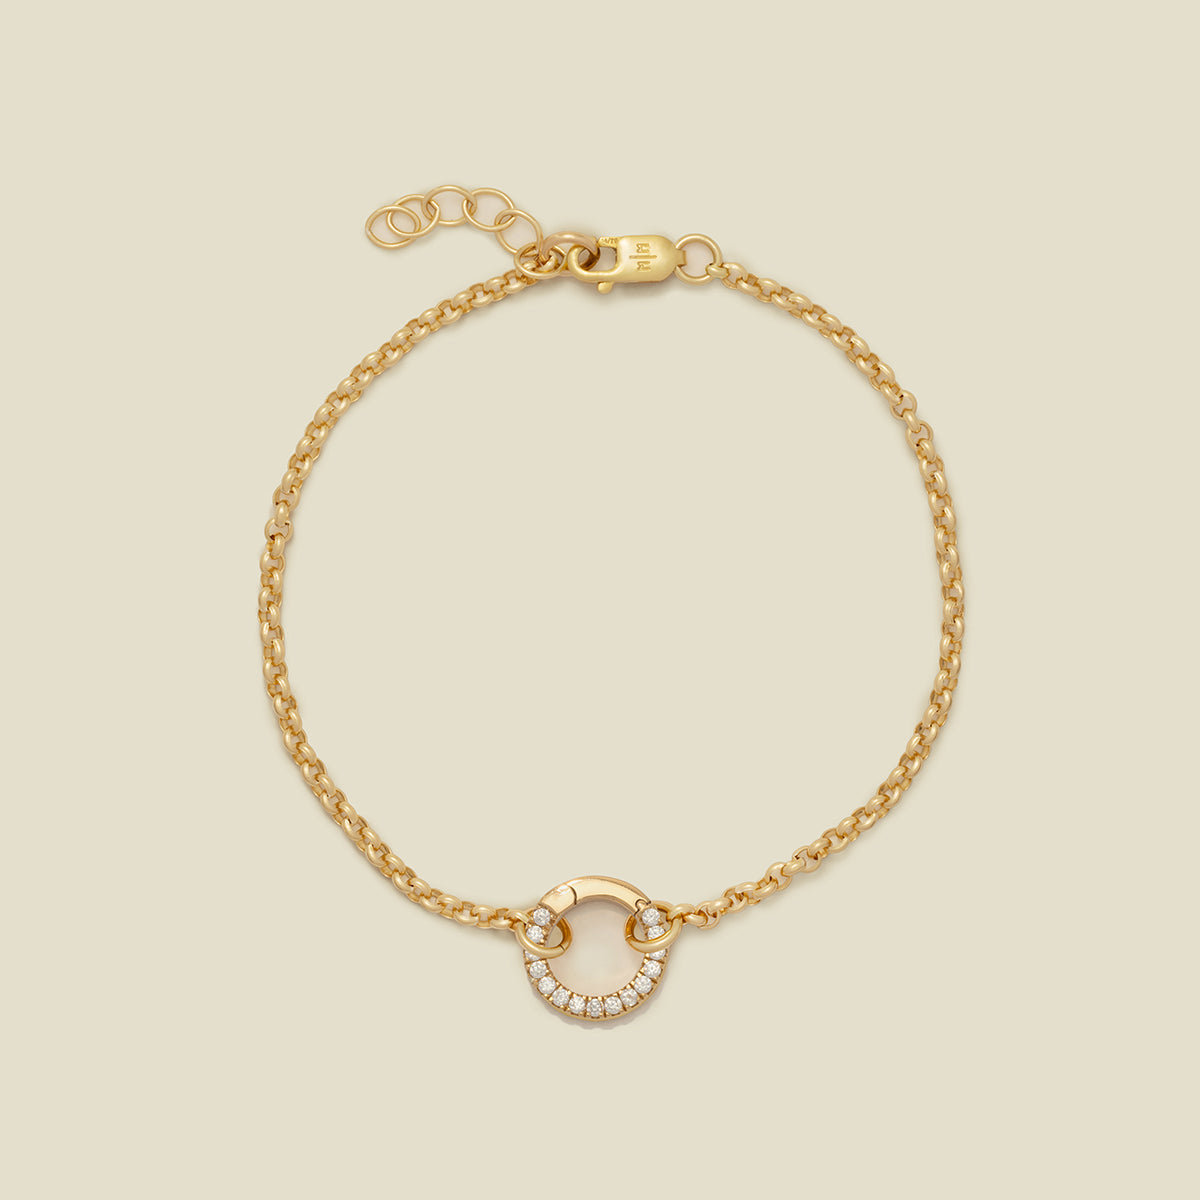 Rolo Charm Bracelet Gold Filled / With CZ Link Lock / 6" Bracelet